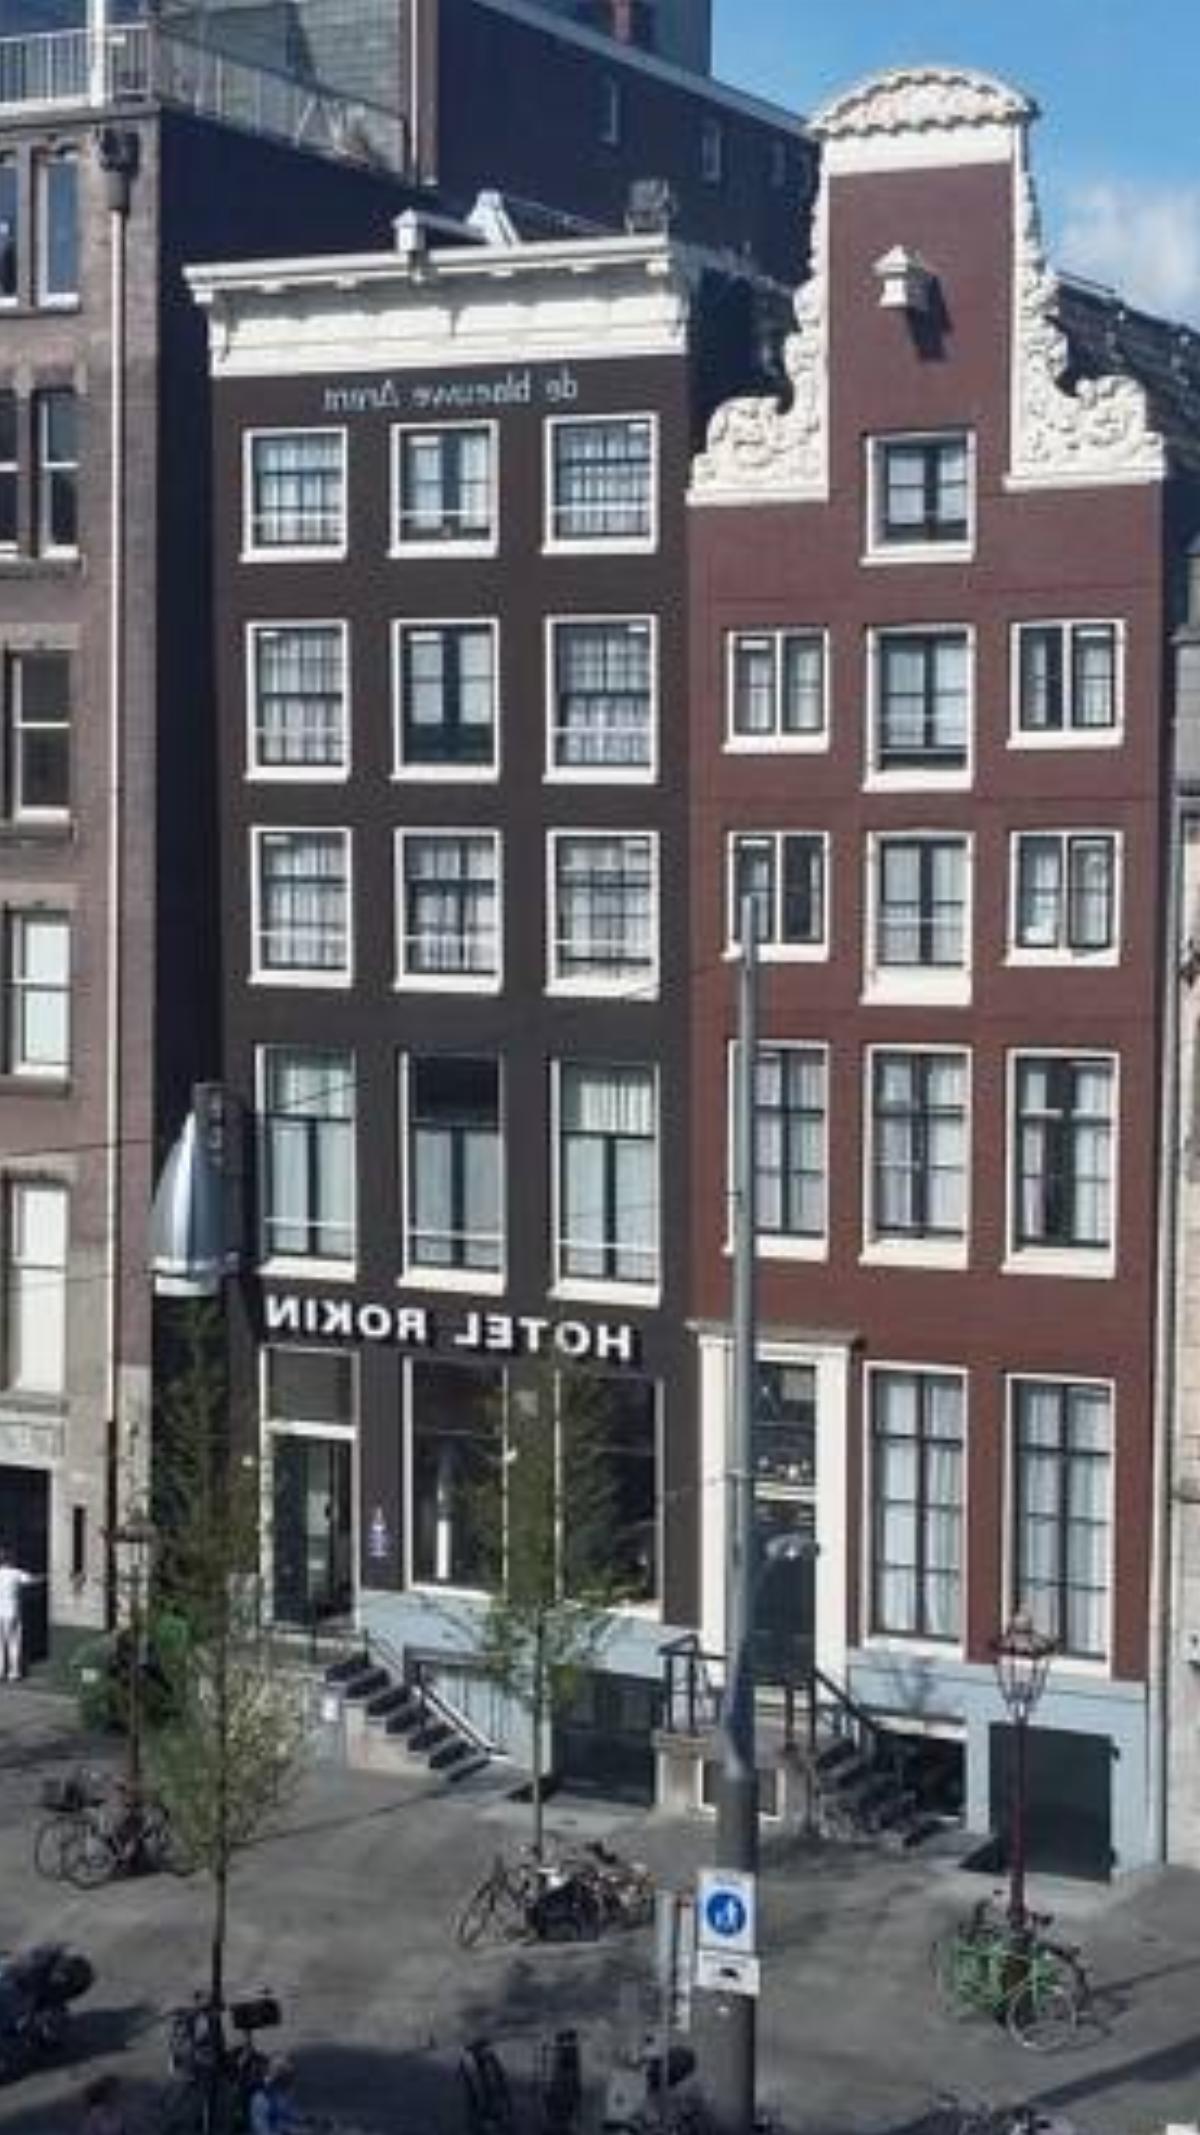 Rokin Hotel Hotel Amsterdam Netherlands